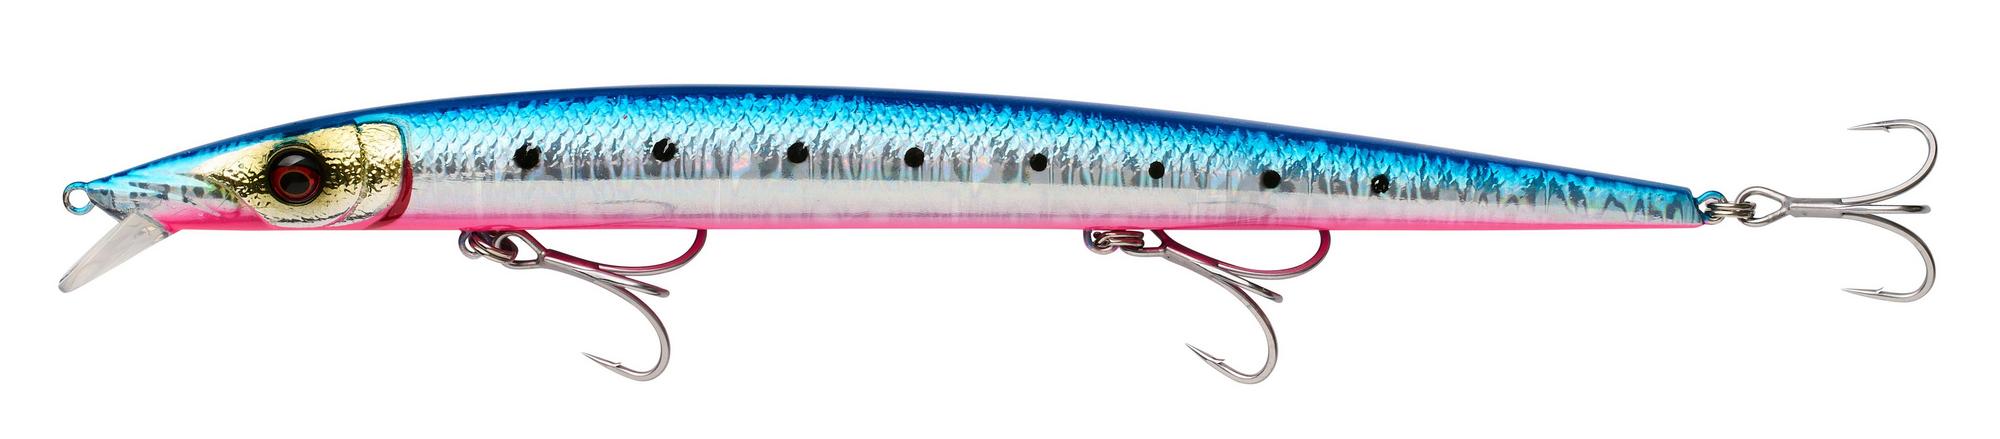 Savage Gear Barra Jerk Marine Fishing Lures  21cm (38g) - Pinkbelly Sardine